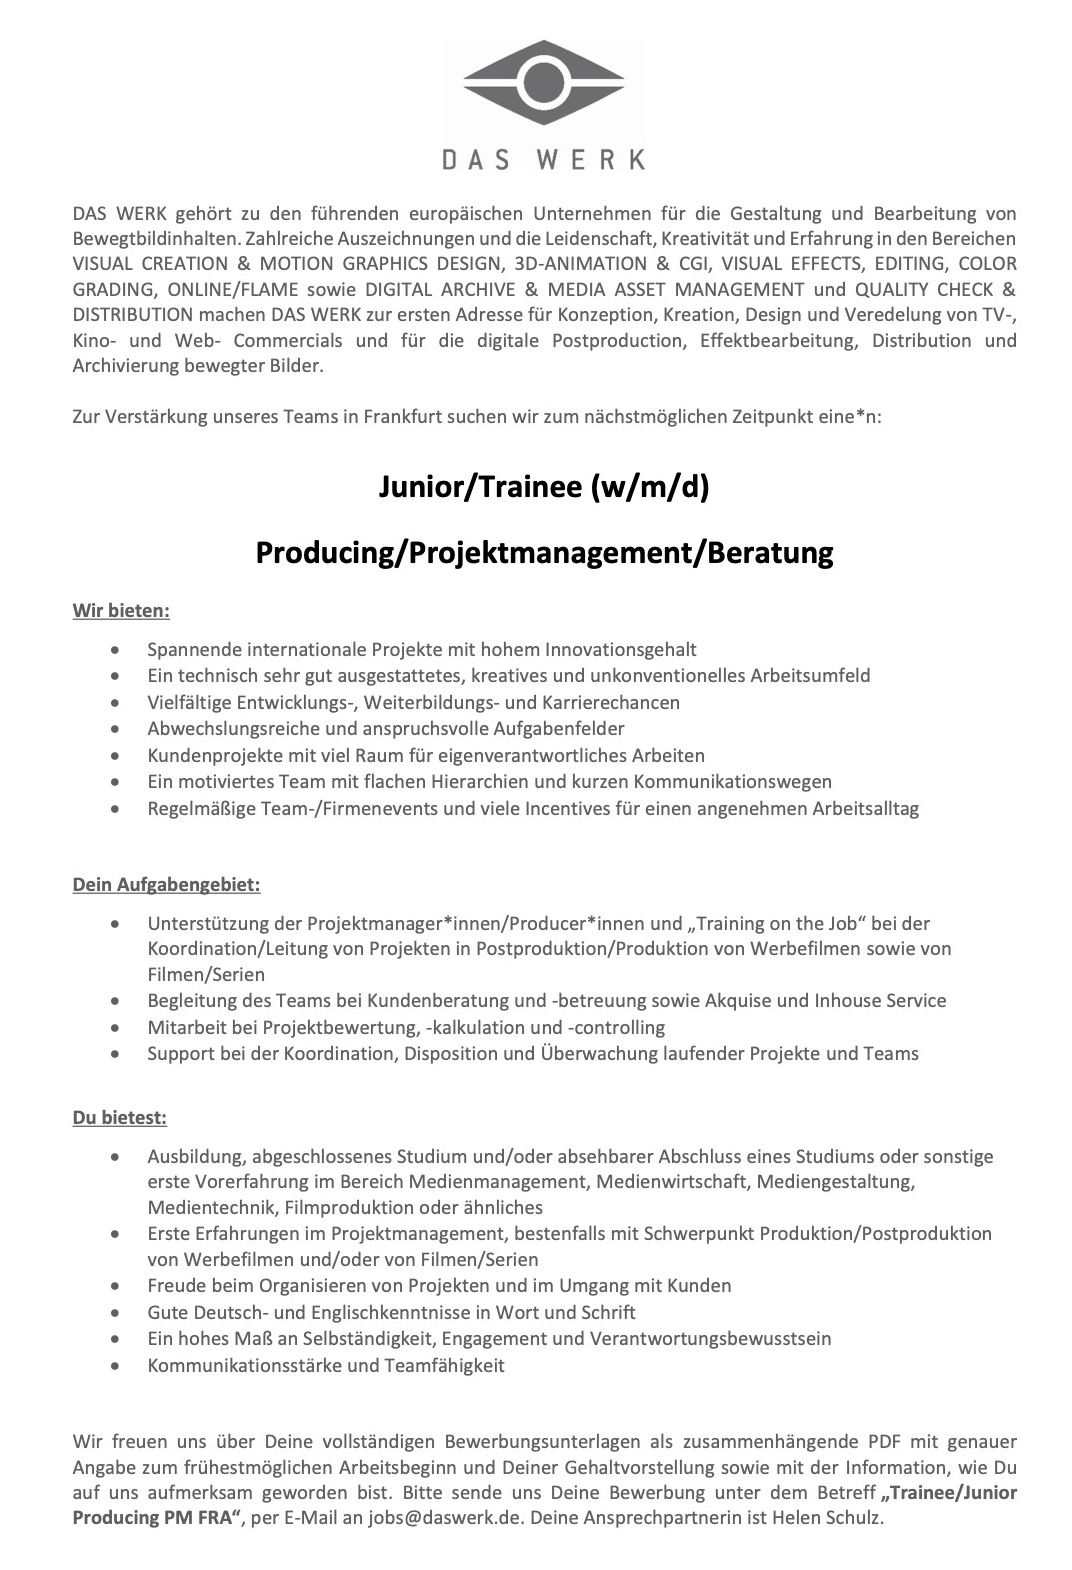 Junior / Trainee (w/m/d) - Producing / Projektmanagement / Beratung